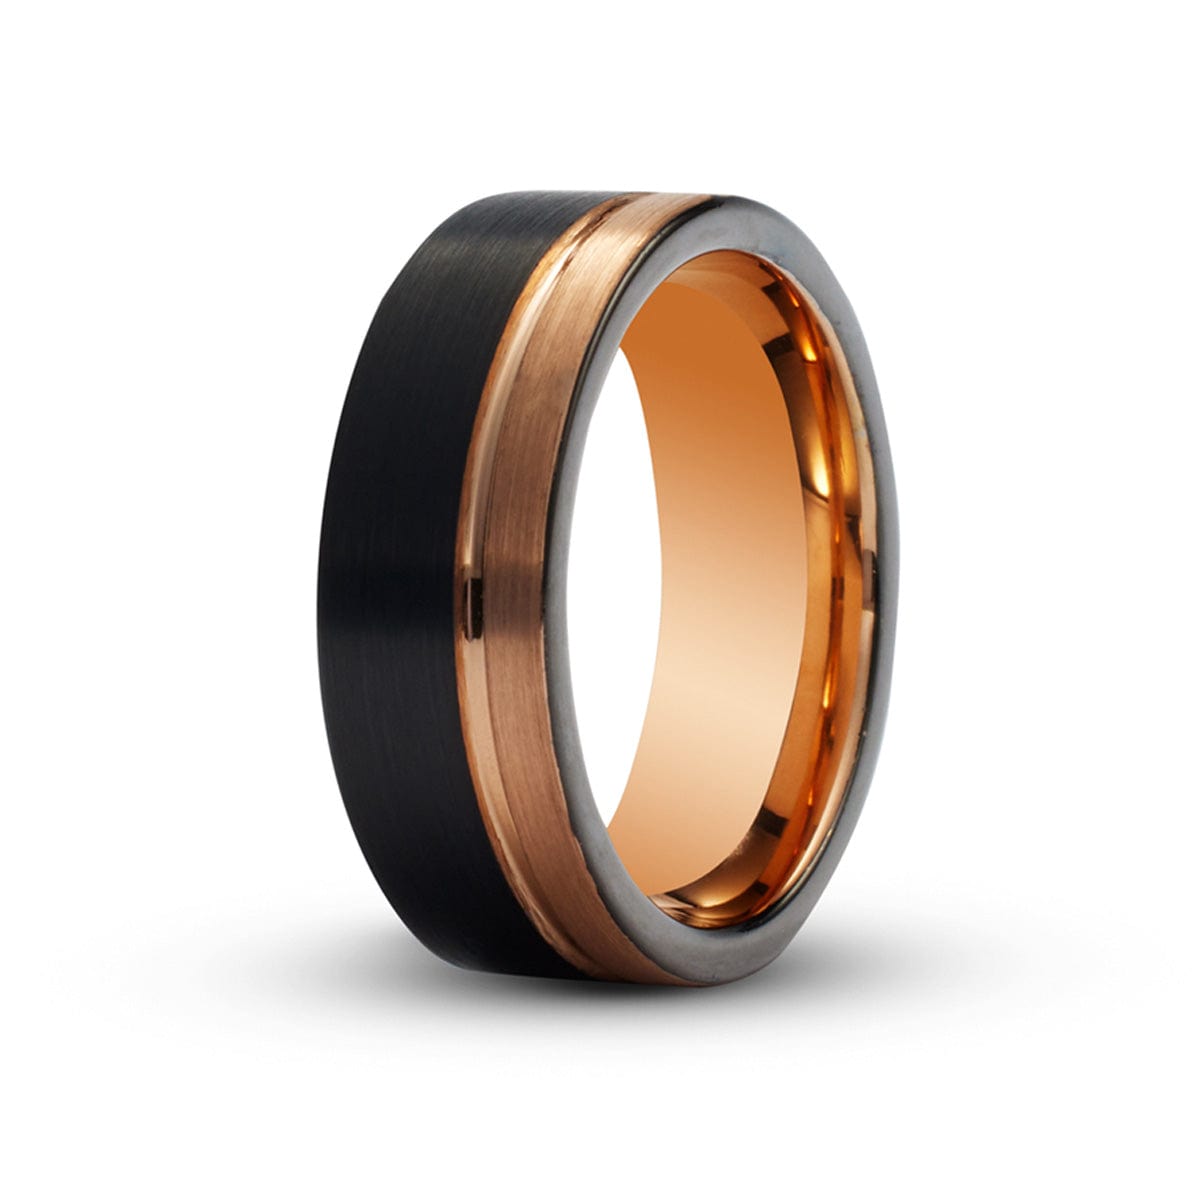 Engagement ring ring for women, men, black steel and black stone